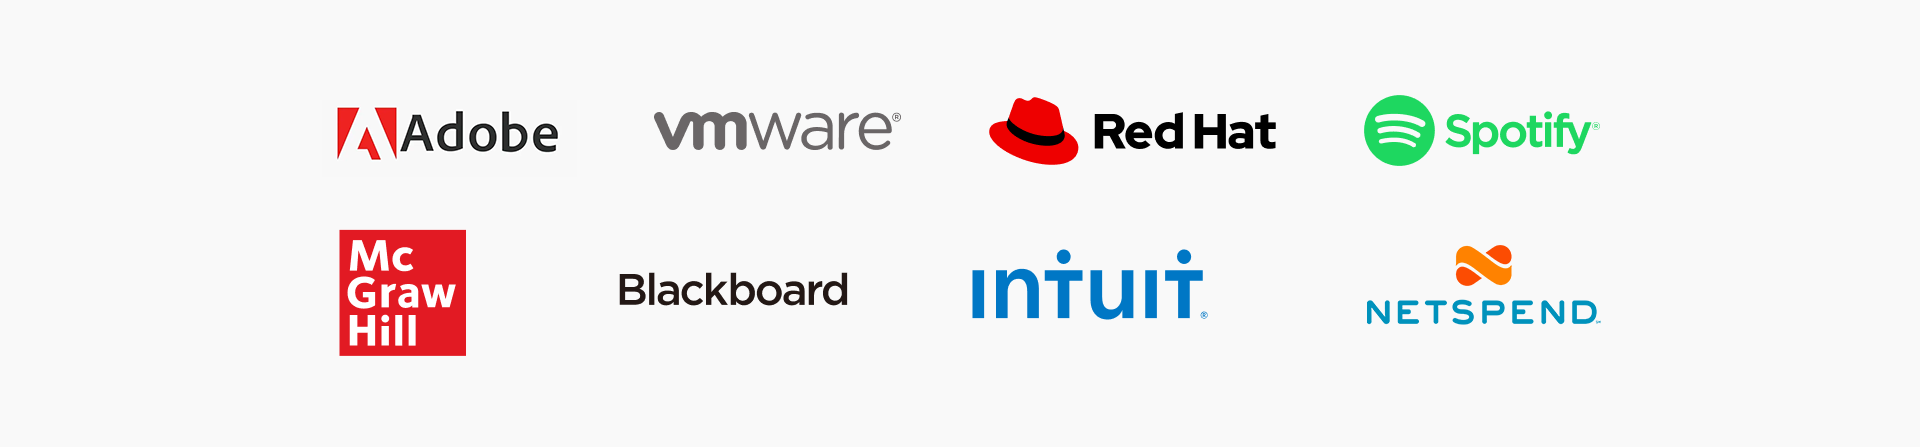 Logos 2 - Adobe, VMWare, Red Hat, Spotify, McGraw Hill, Blackboard, Intuit, NetSpend